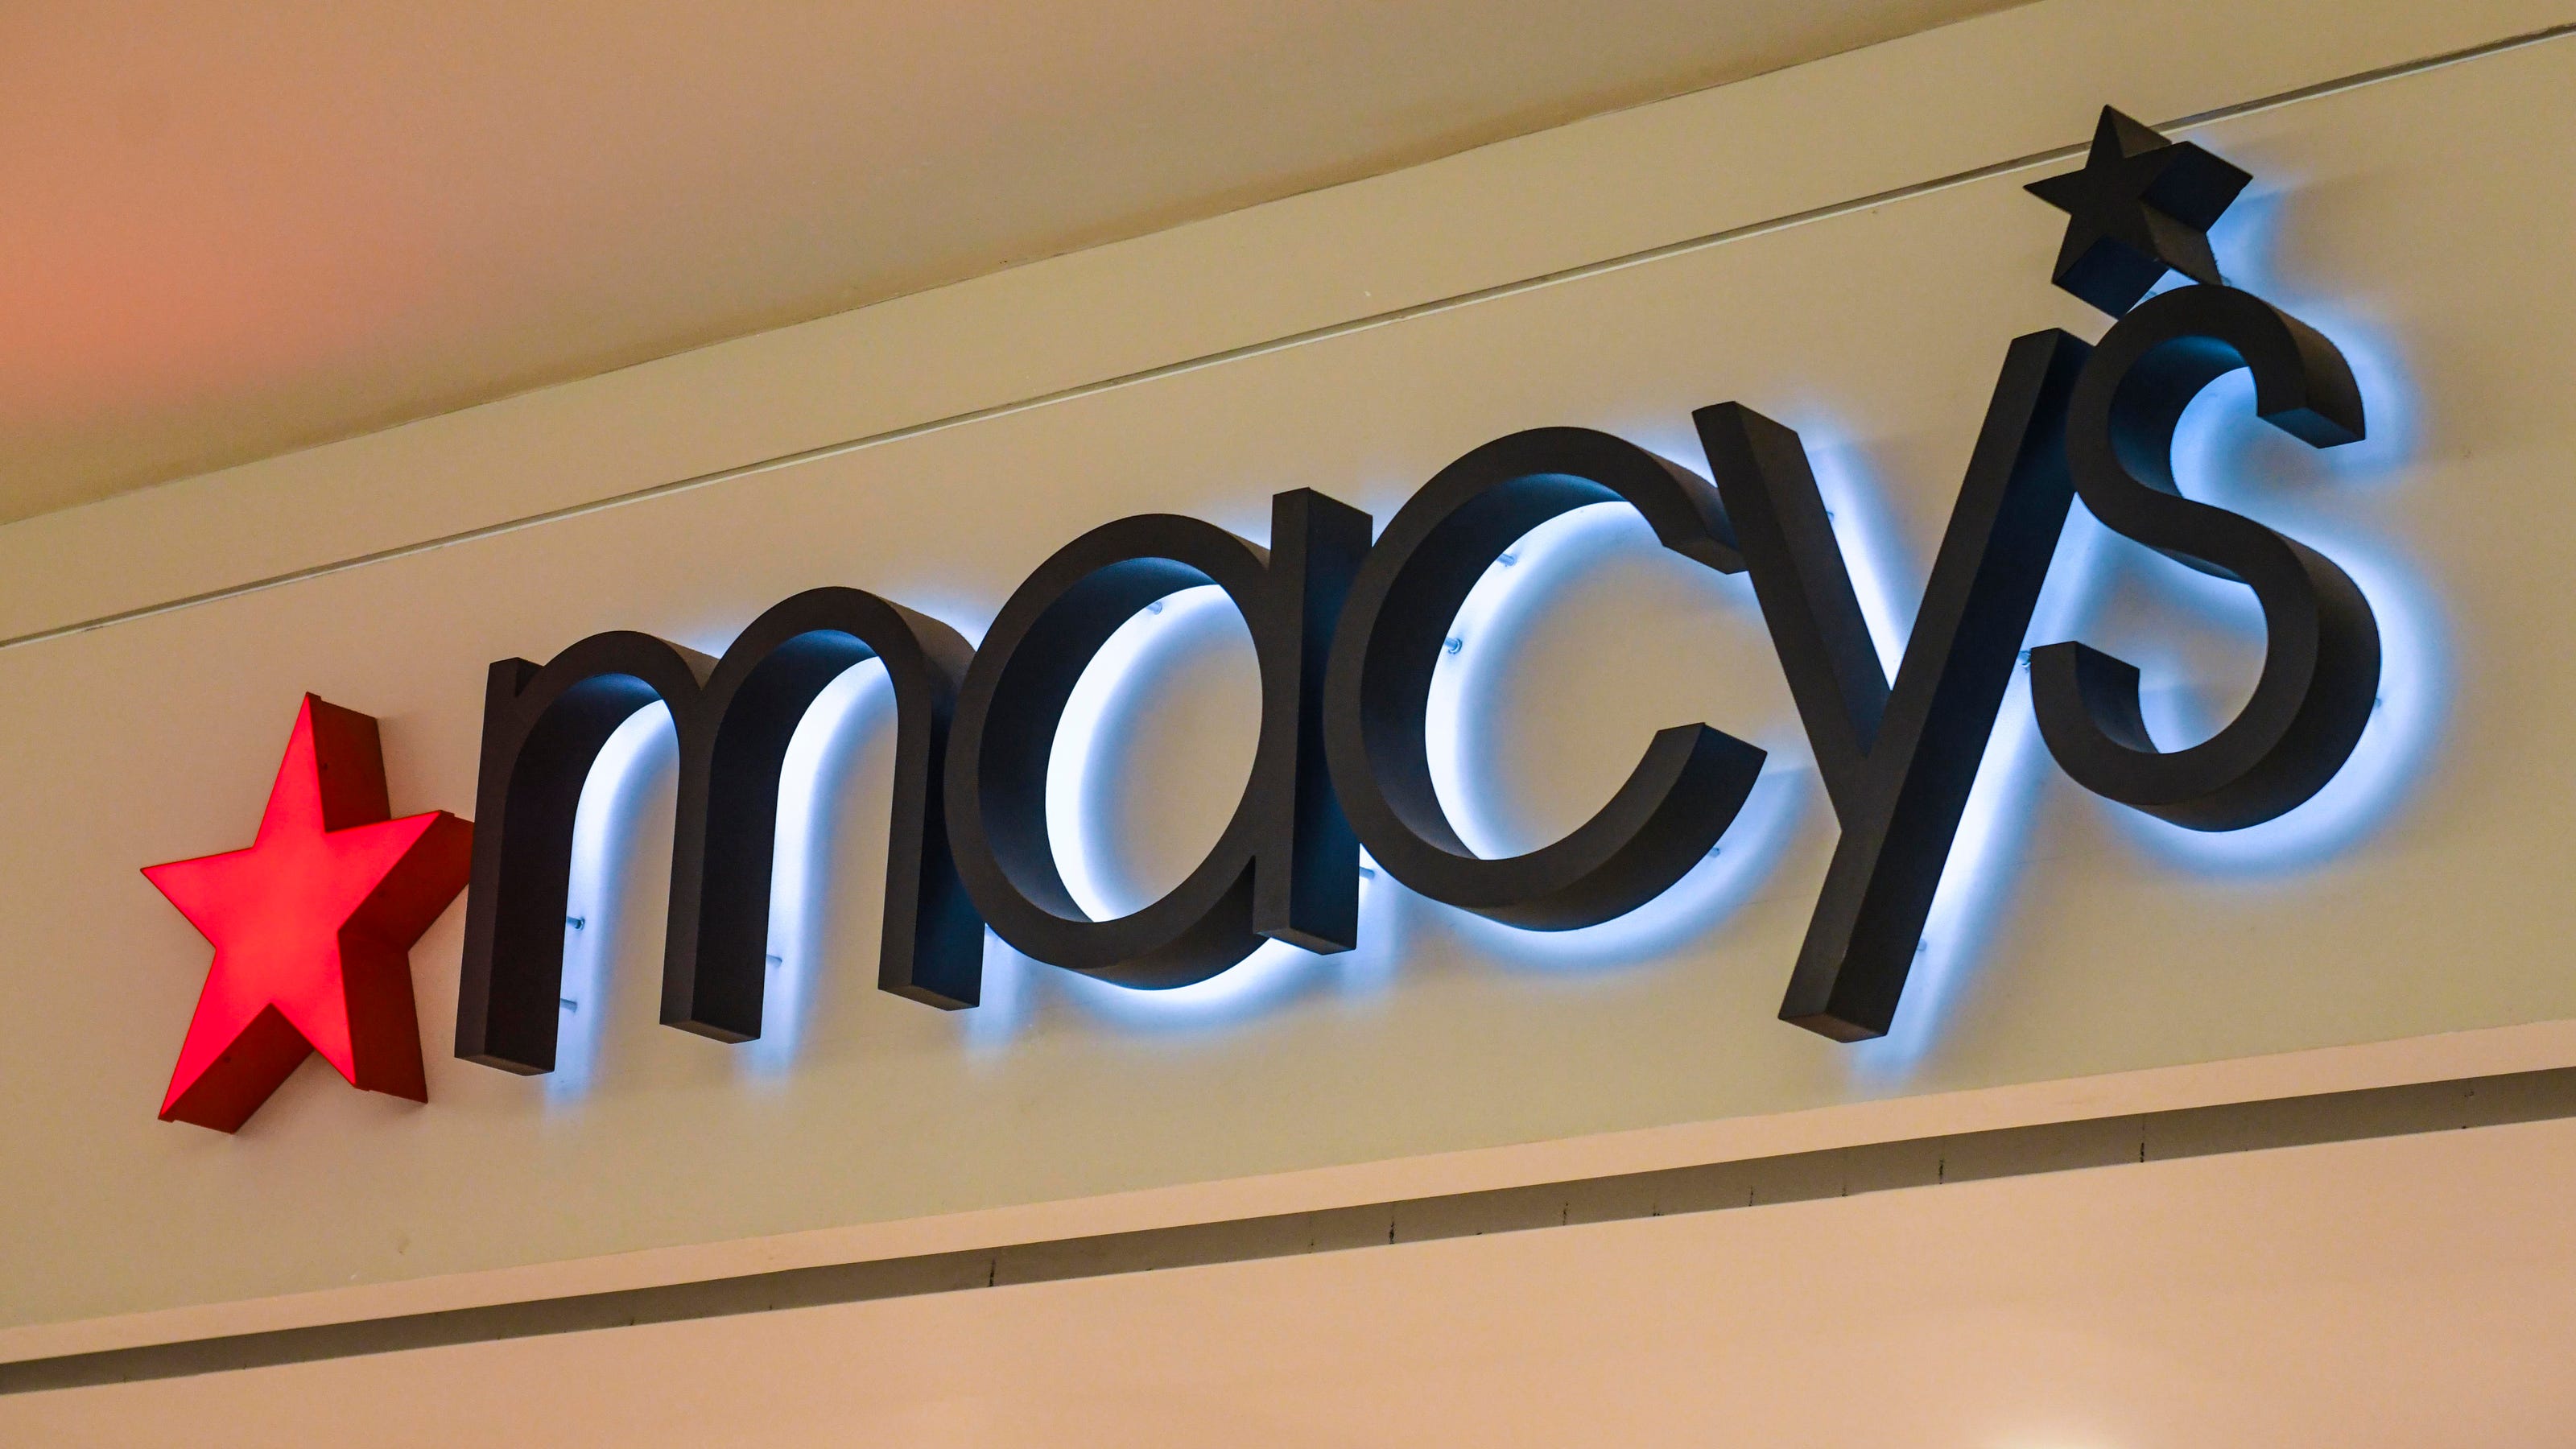 macy-s-star-rewards-loyalty-program-growing-despite-store-closings